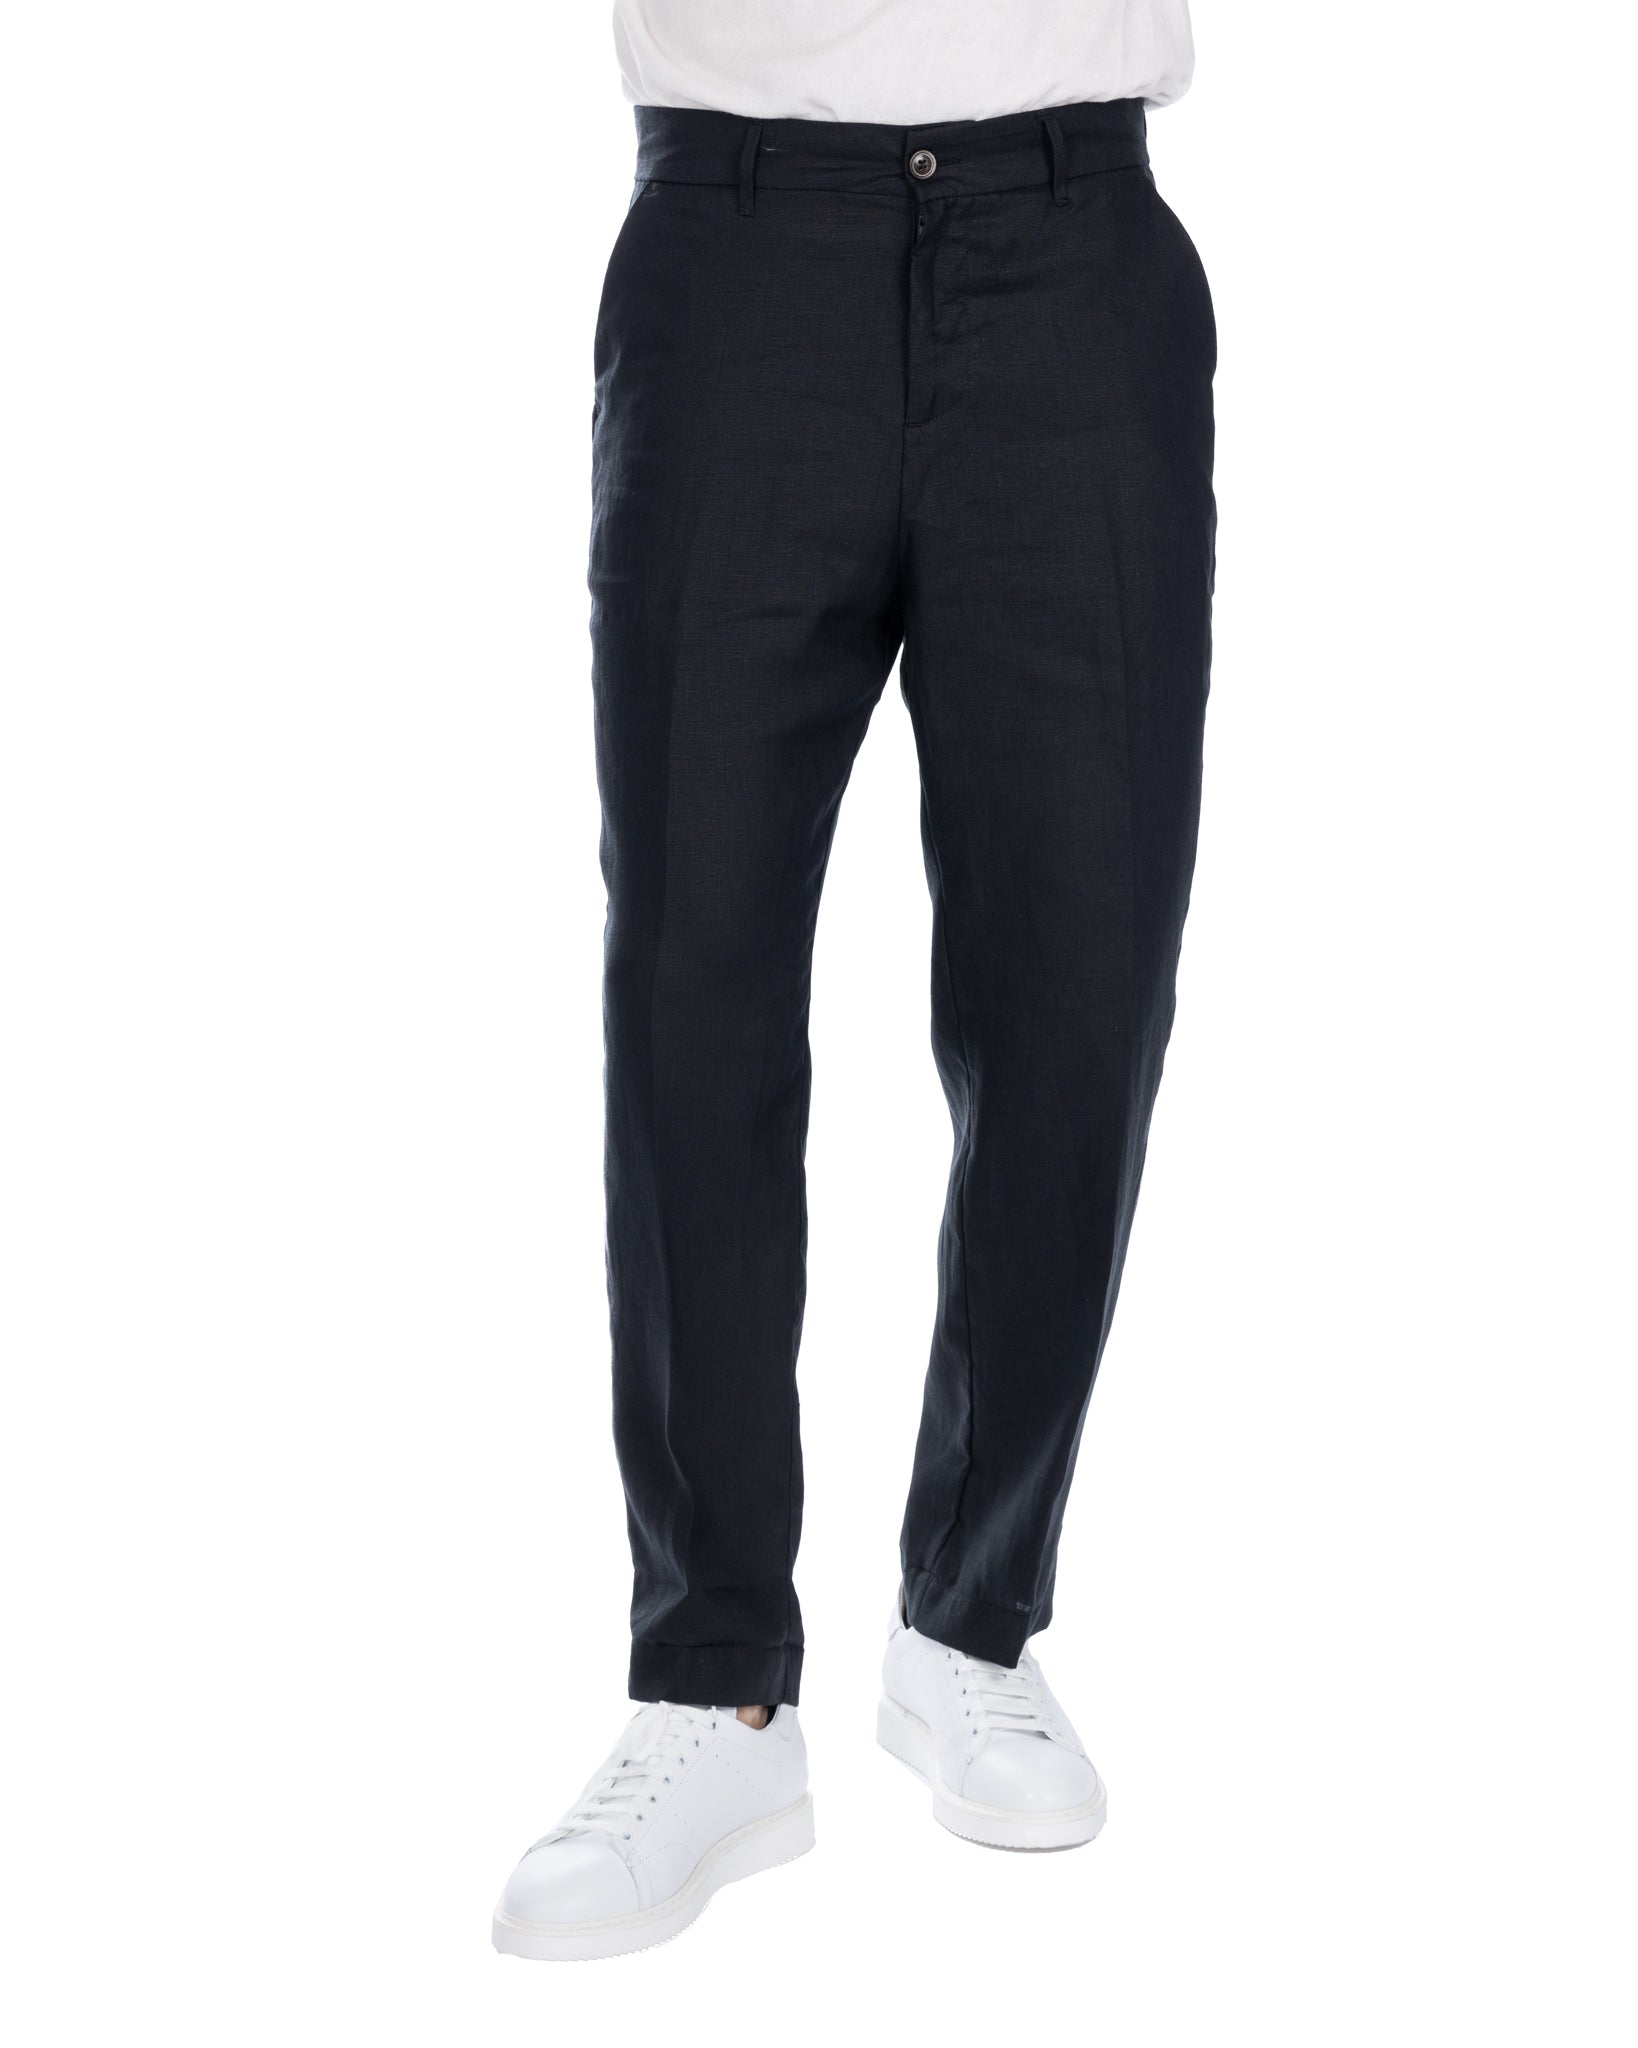 Lucas - wide black trousers in pure linen